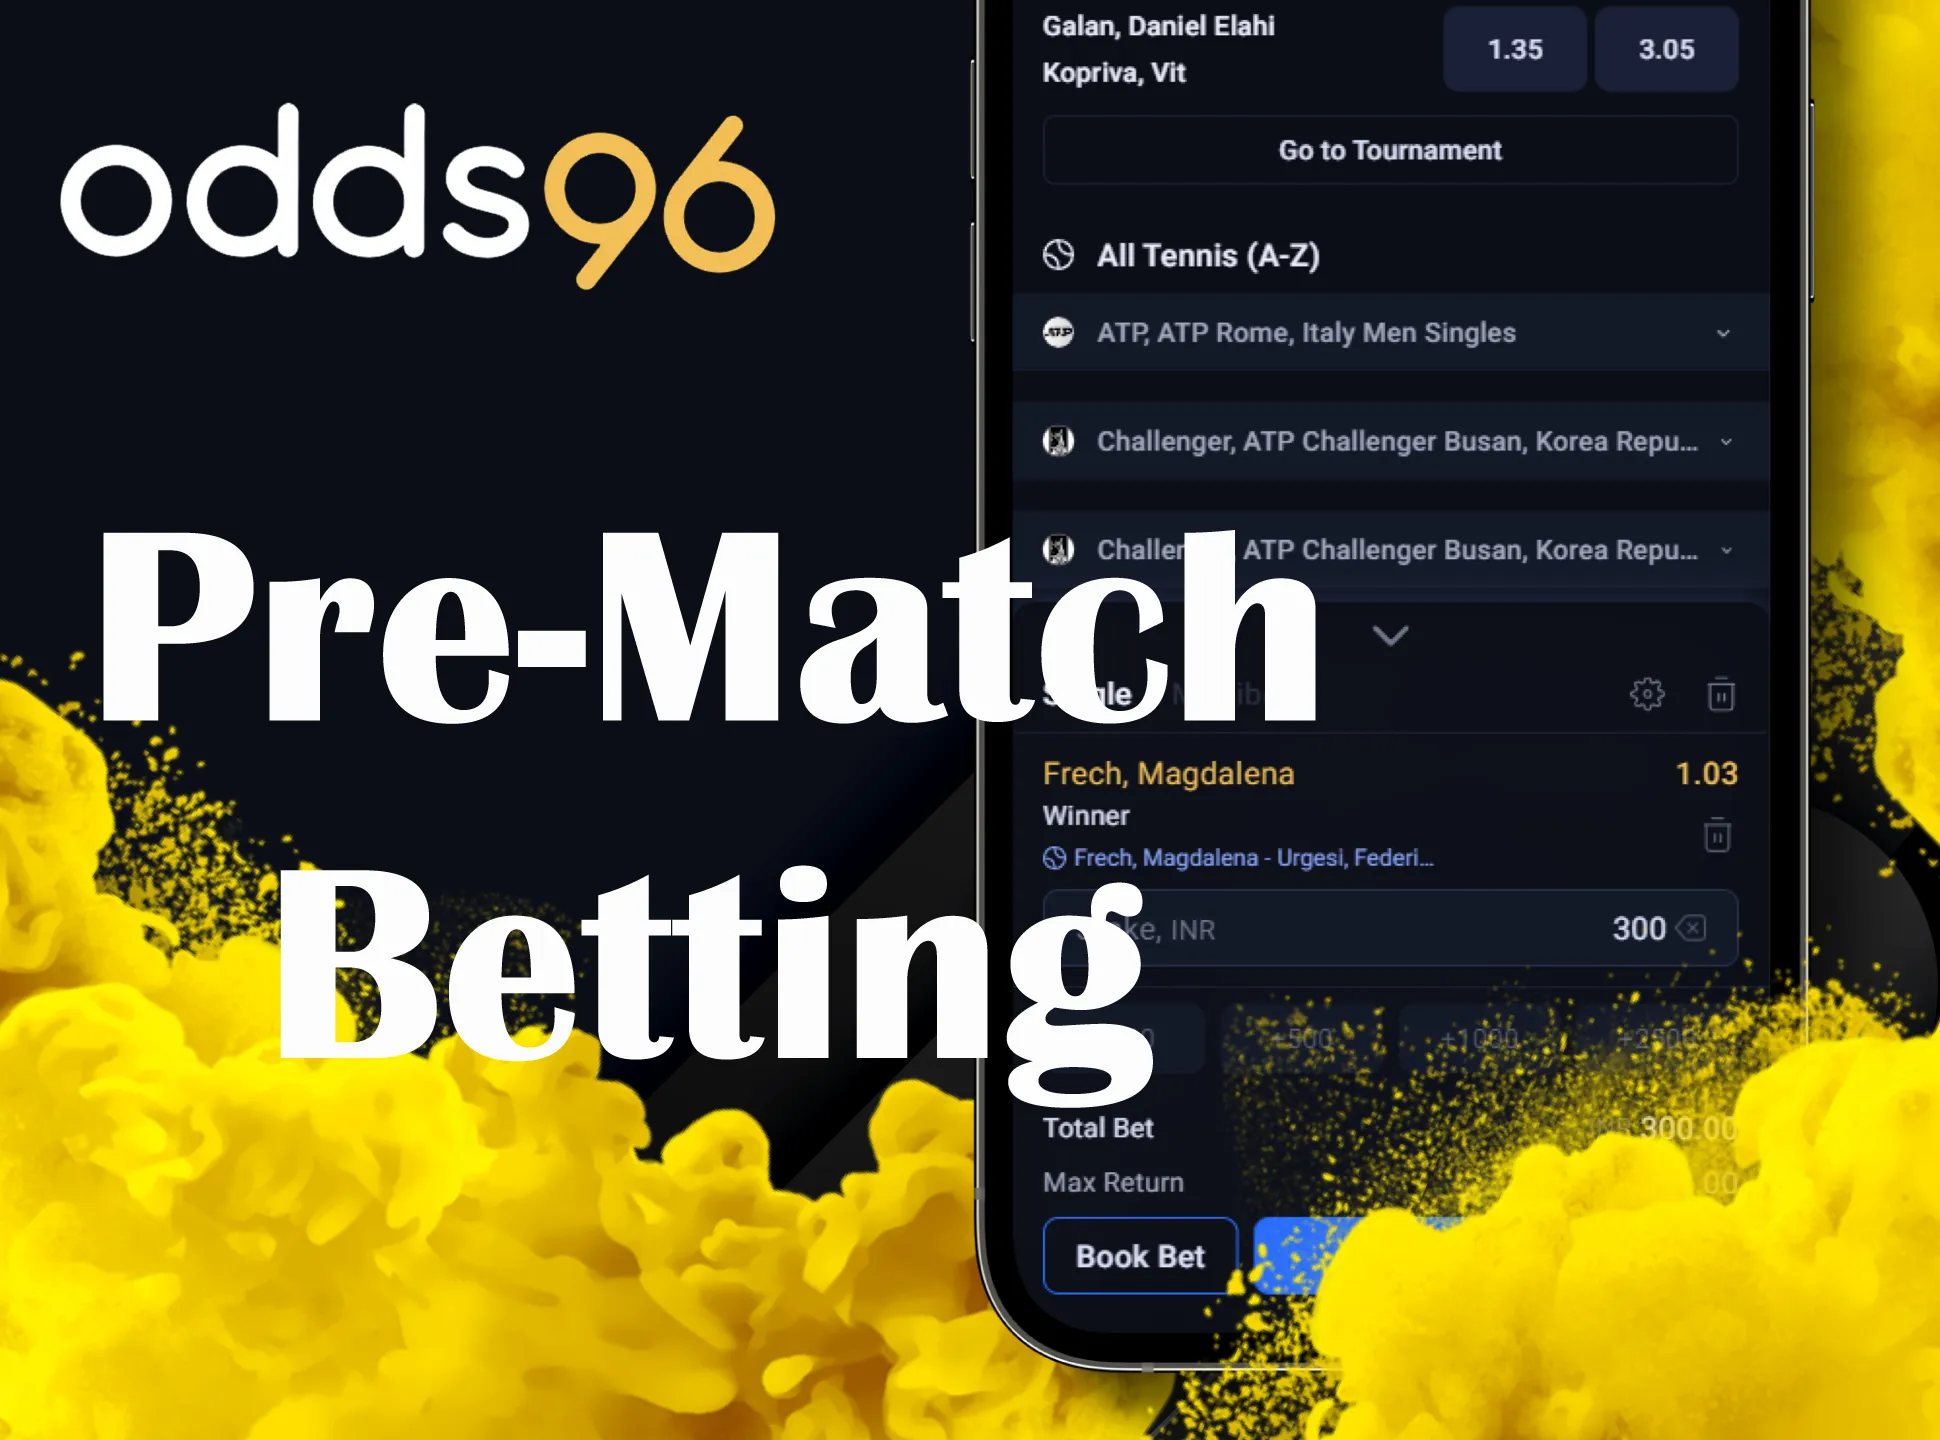 Make bet before match start at Odds96.